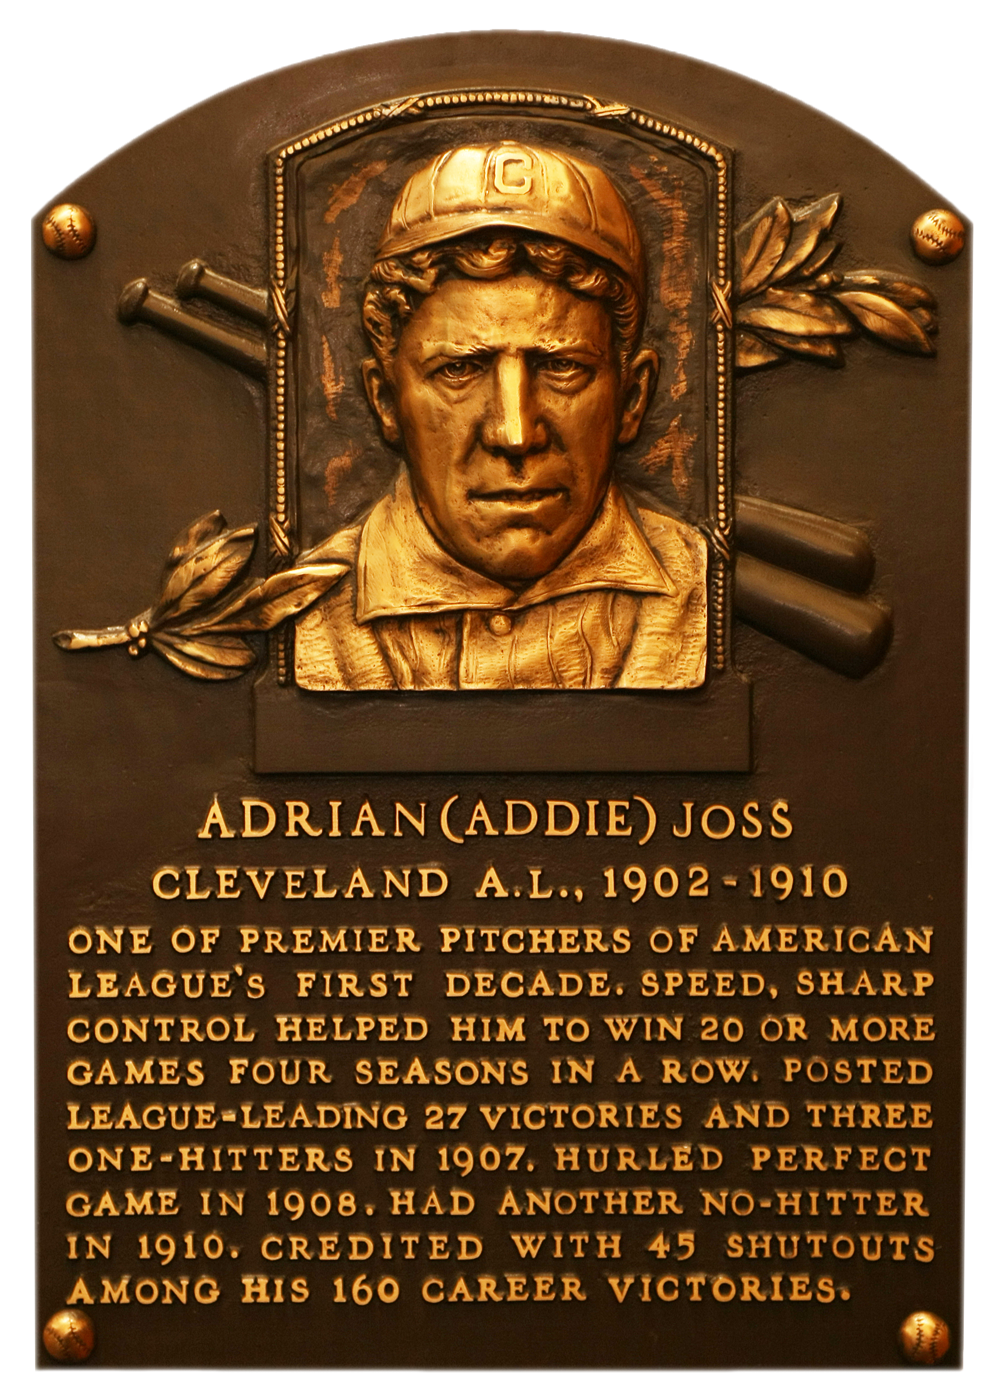 Addie Joss Hall of Fame plaque